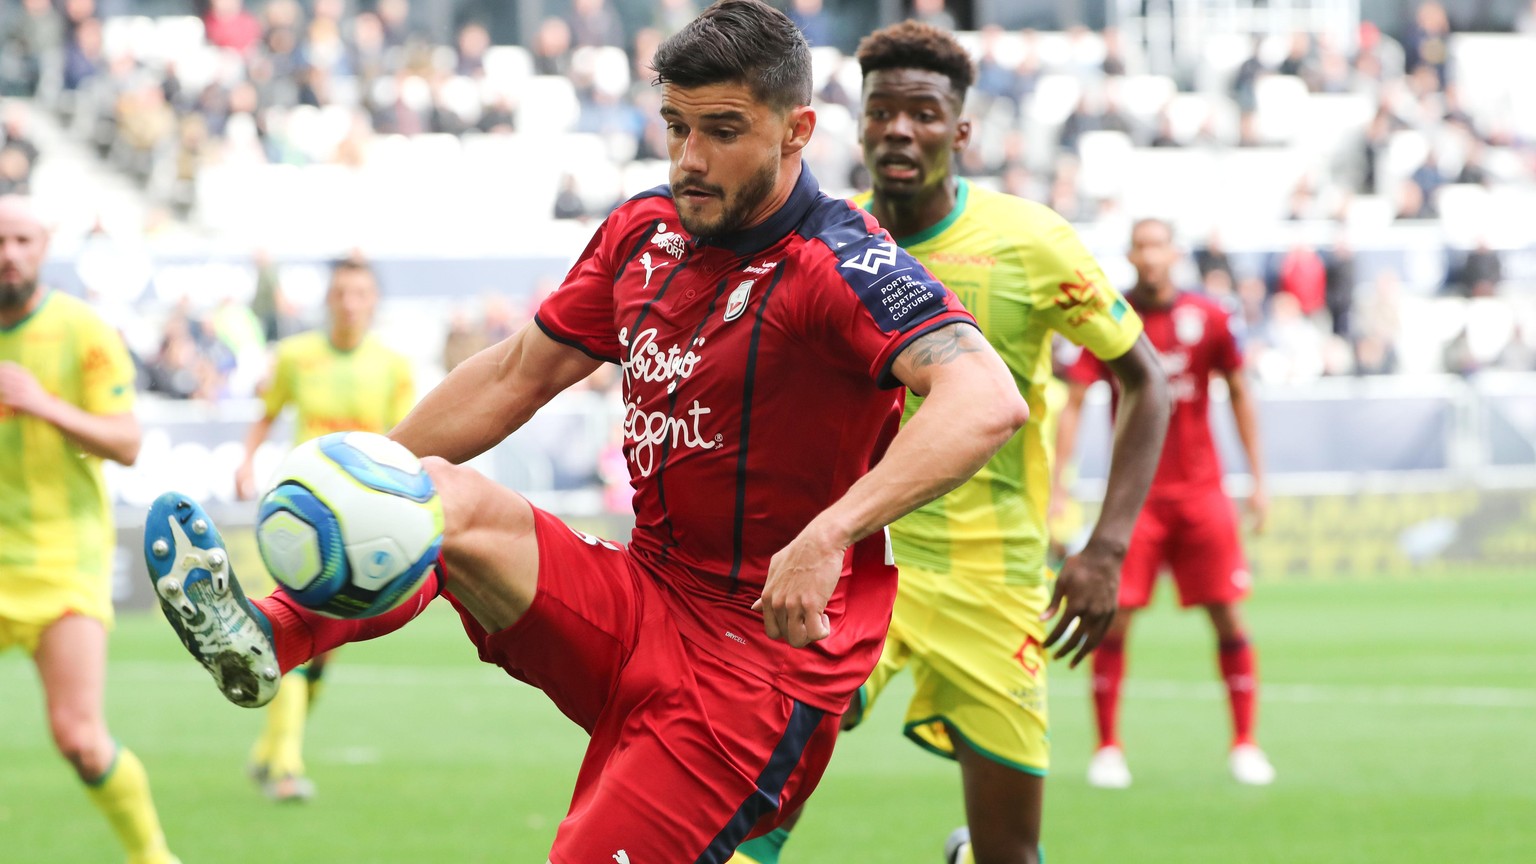 23 LORIS BENITO BOR FOOTBALL : Bordeaux vs Nantes - Ligue 1 Conforama - 03/11/2019 FEP/Panoramic PUBLICATIONxNOTxINxFRAxITAxBEL